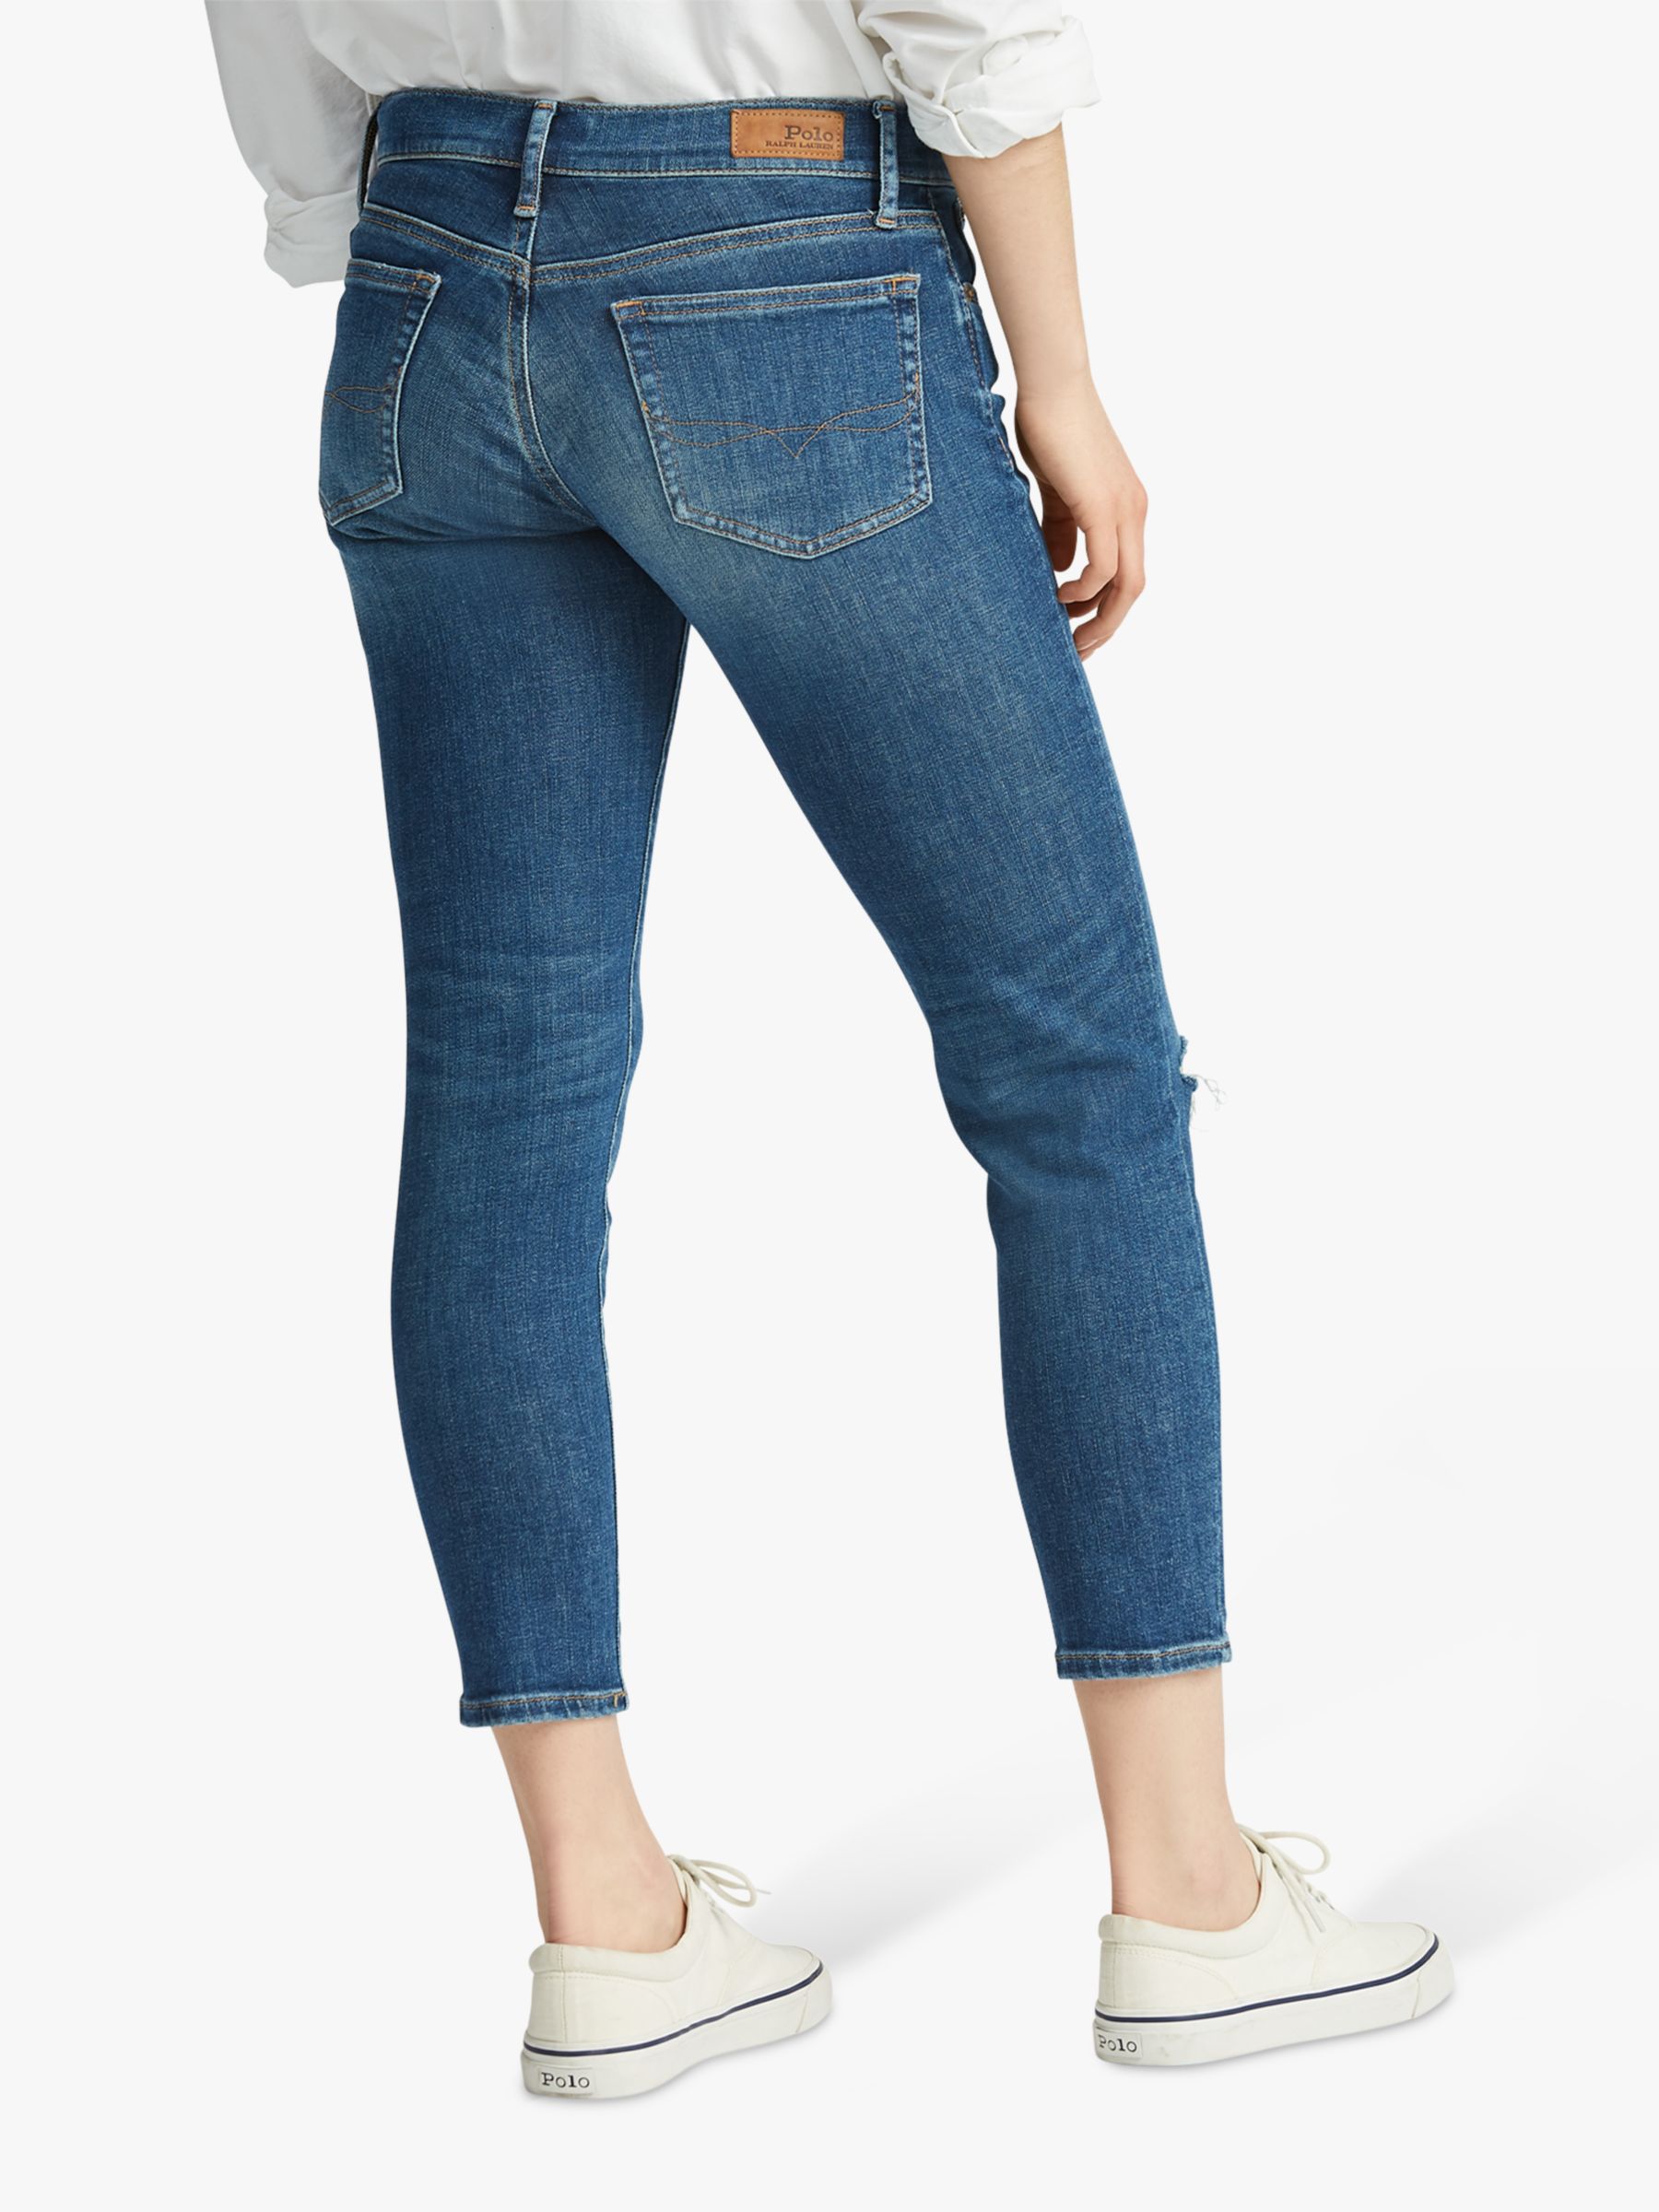 polo ralph lauren skinny jeans